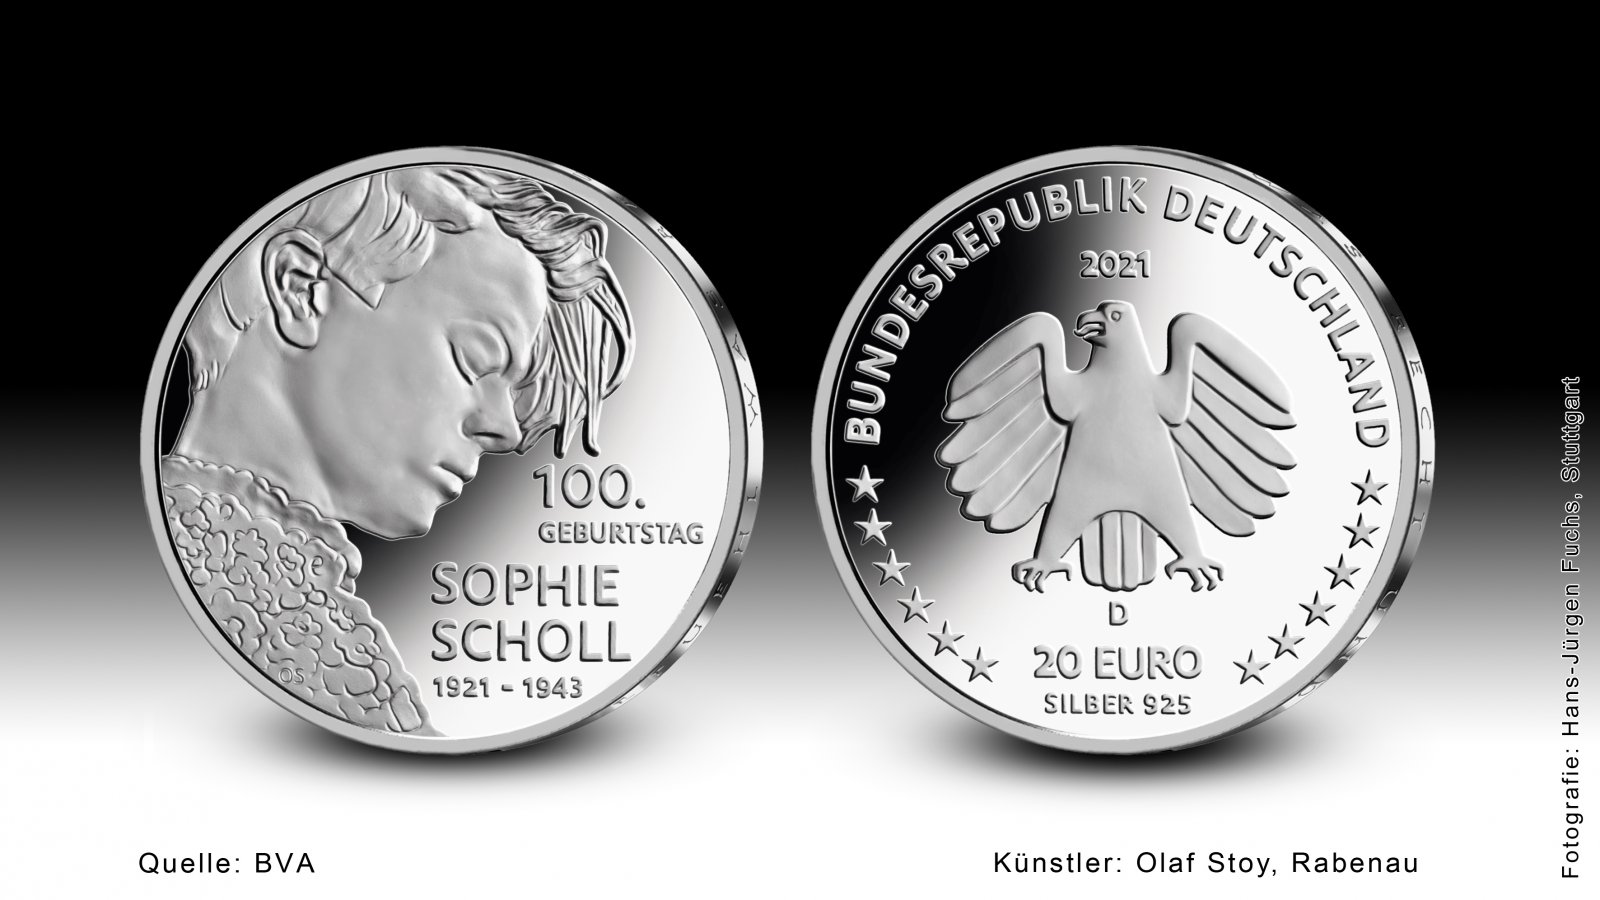 Download 20 euro collector coin 2021 "100. Geburtstag Sophie Scholl" 